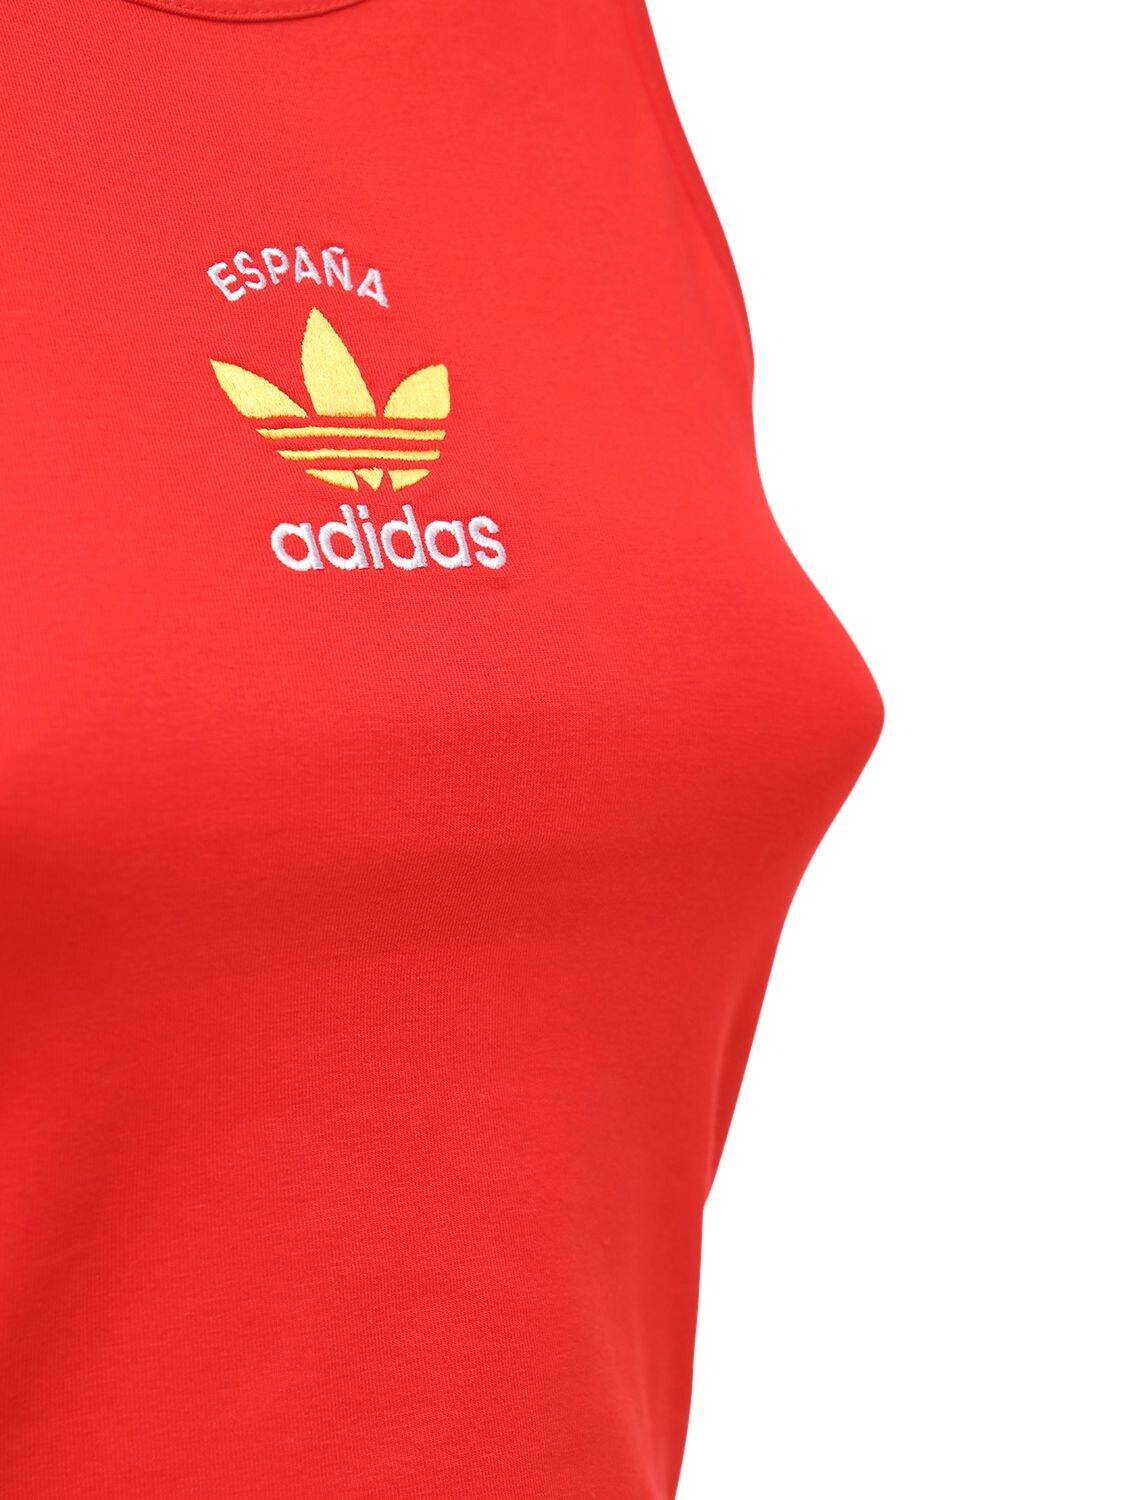 adidas Originals 3-s Spain Stretch Cotton Crop Tank Top in Red | Lyst UK